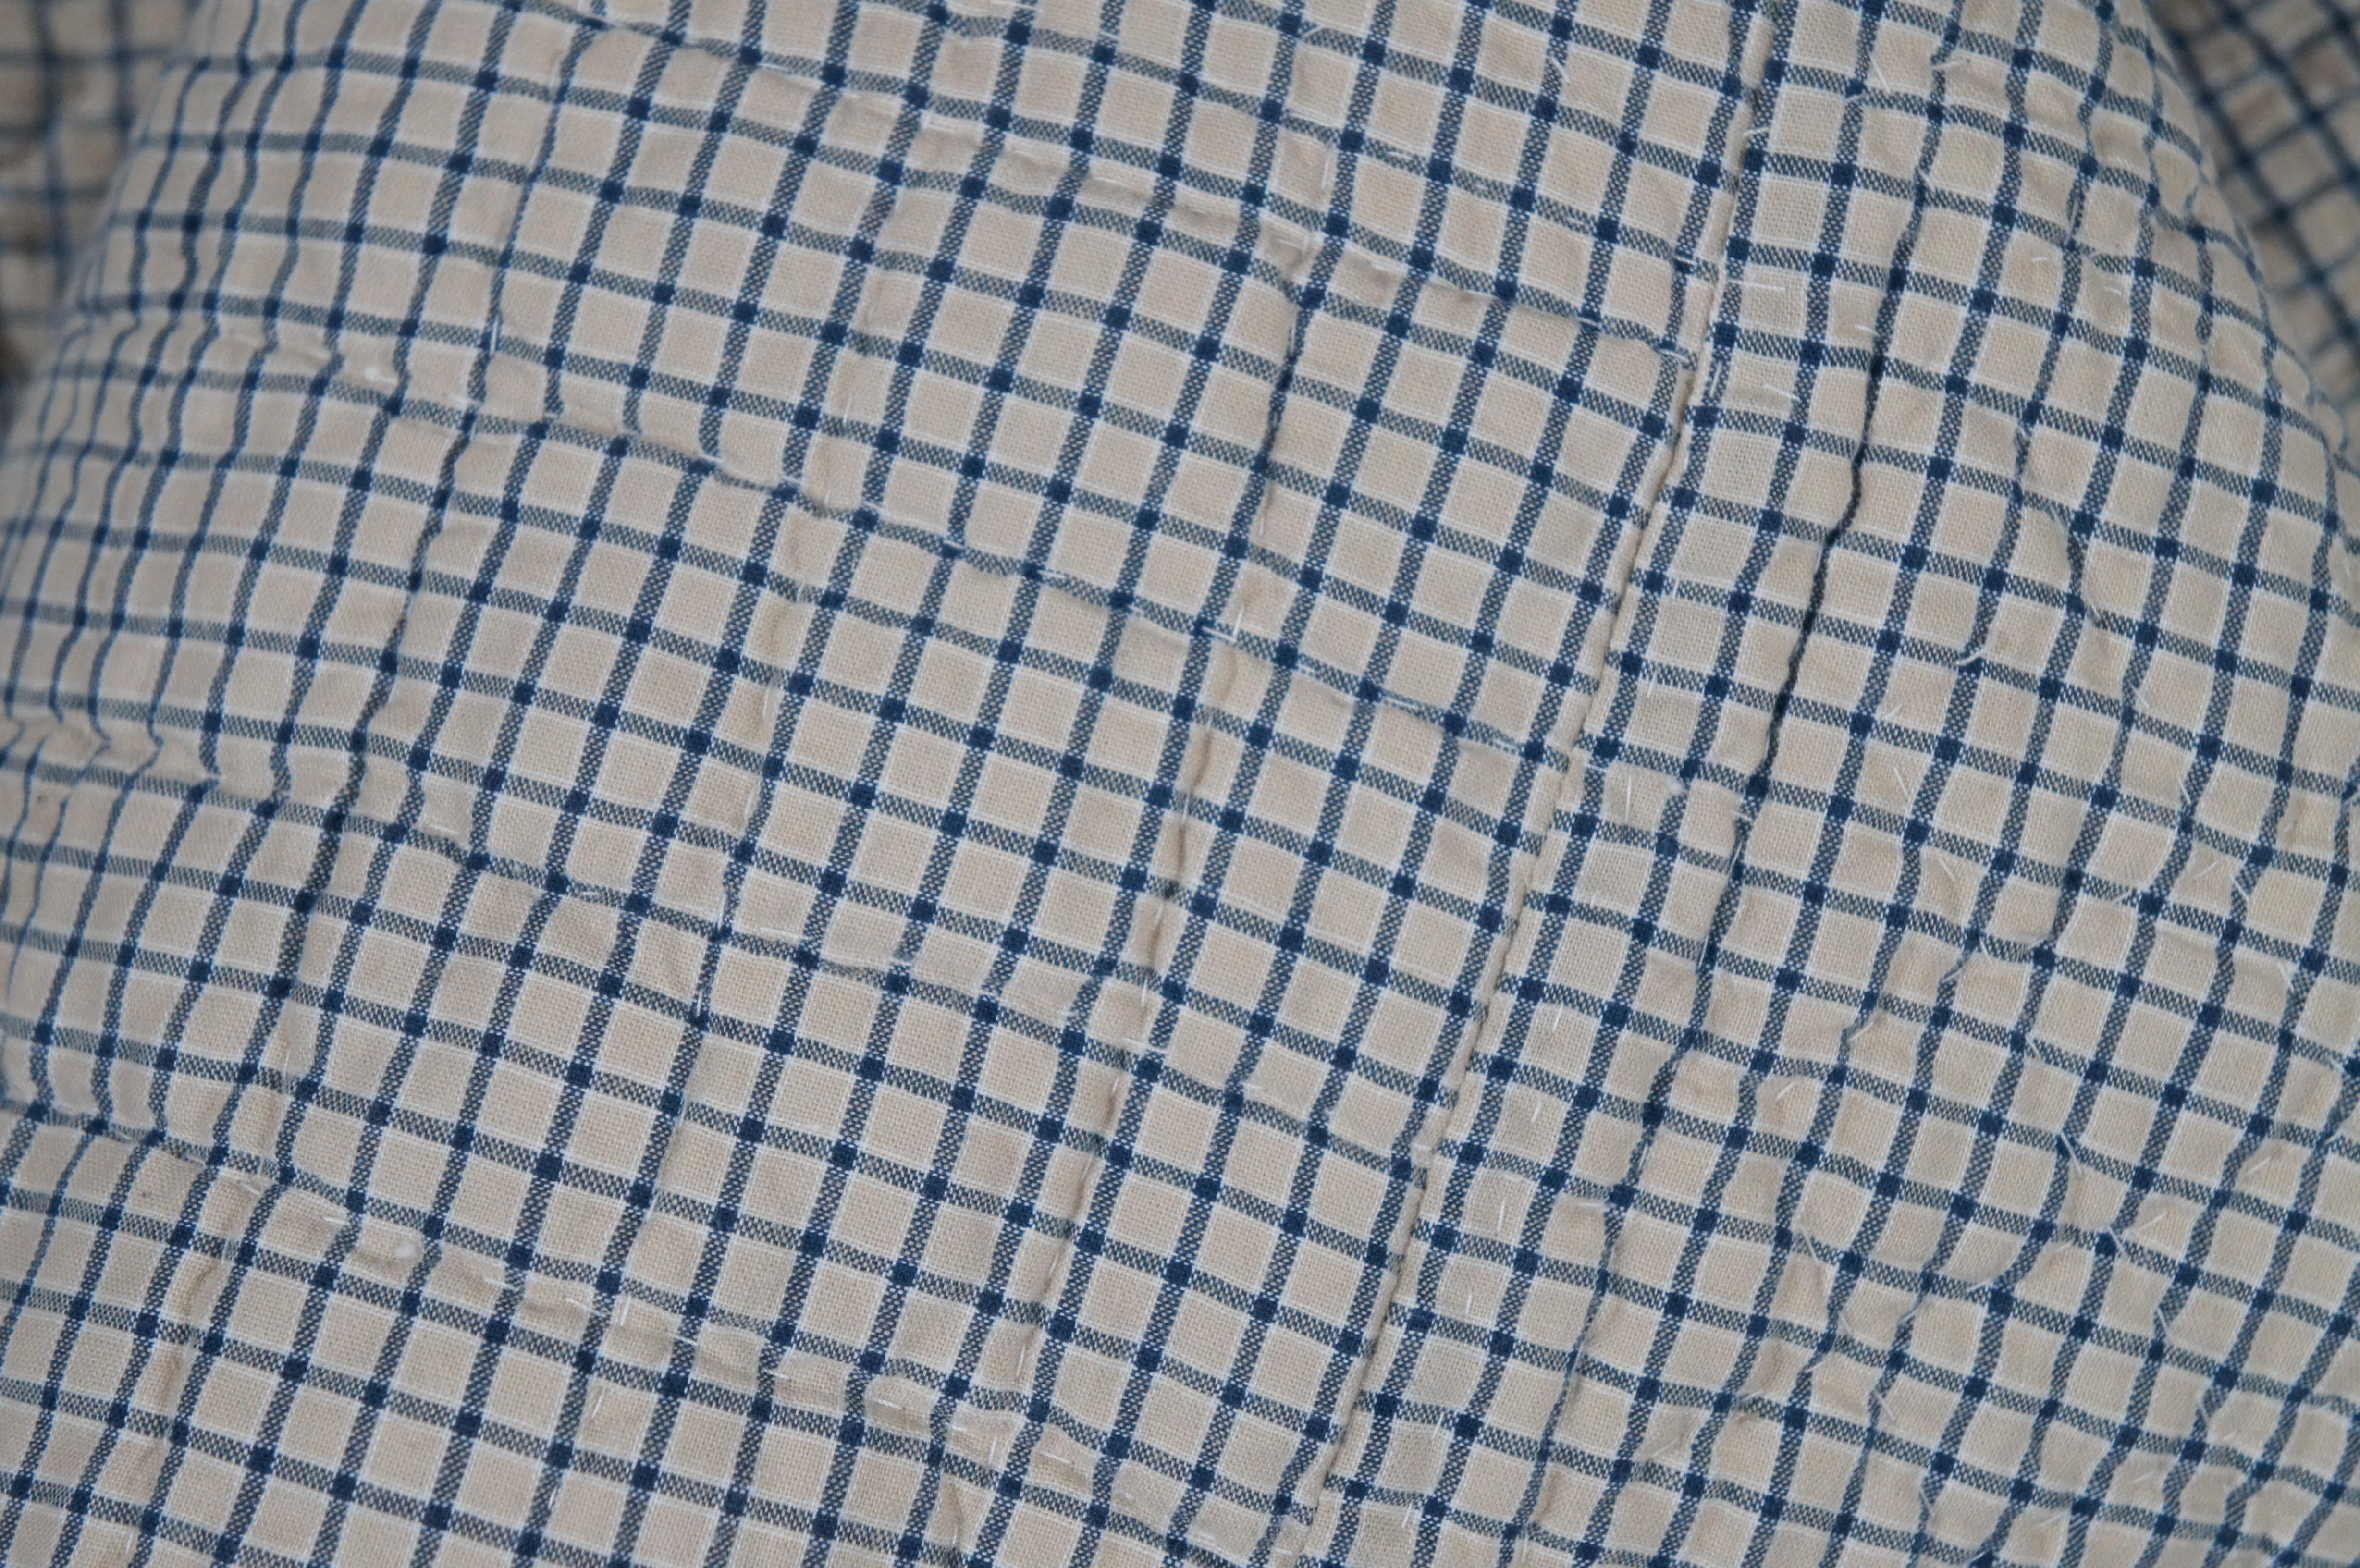 Antique Folk Art Stitched Geometric Patchwork Quilt Blanket Gingham Check For Sale 4